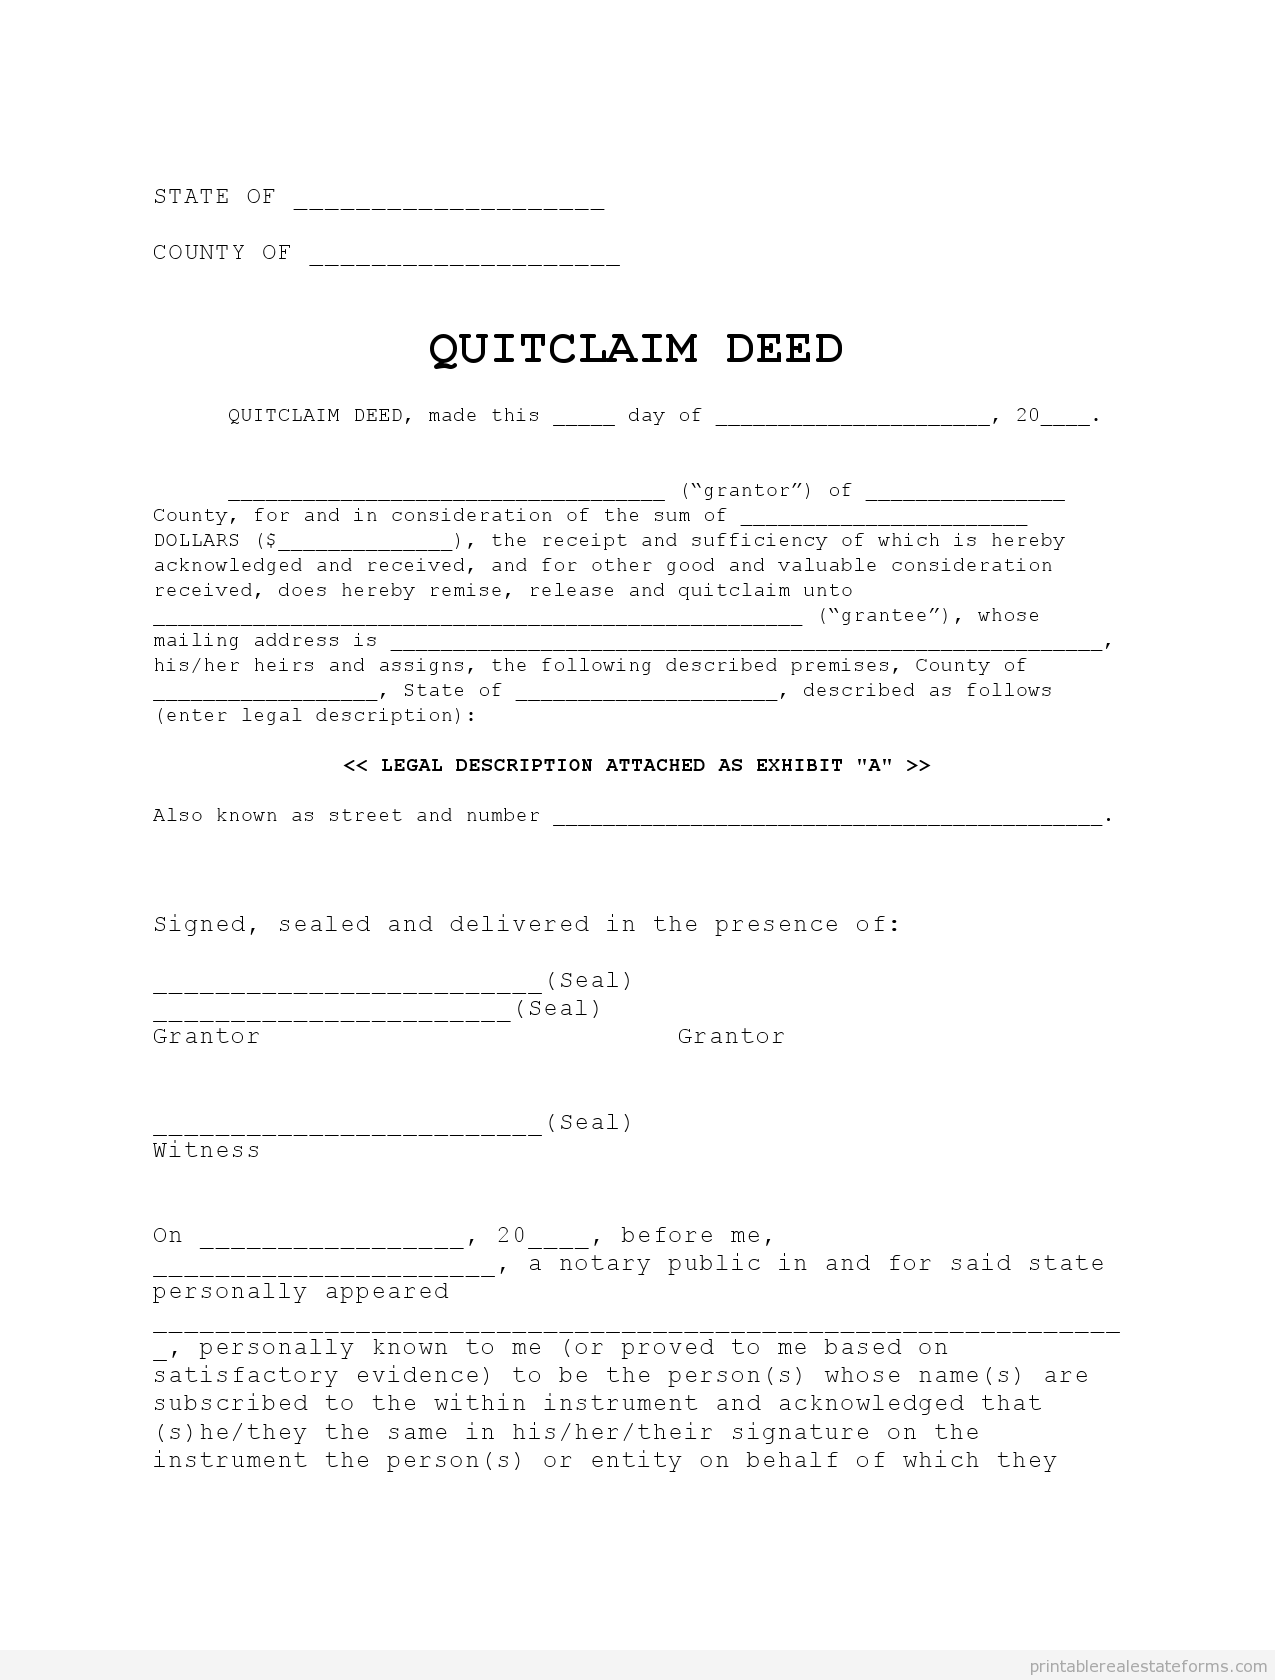 printable-quitclaim-deed-form